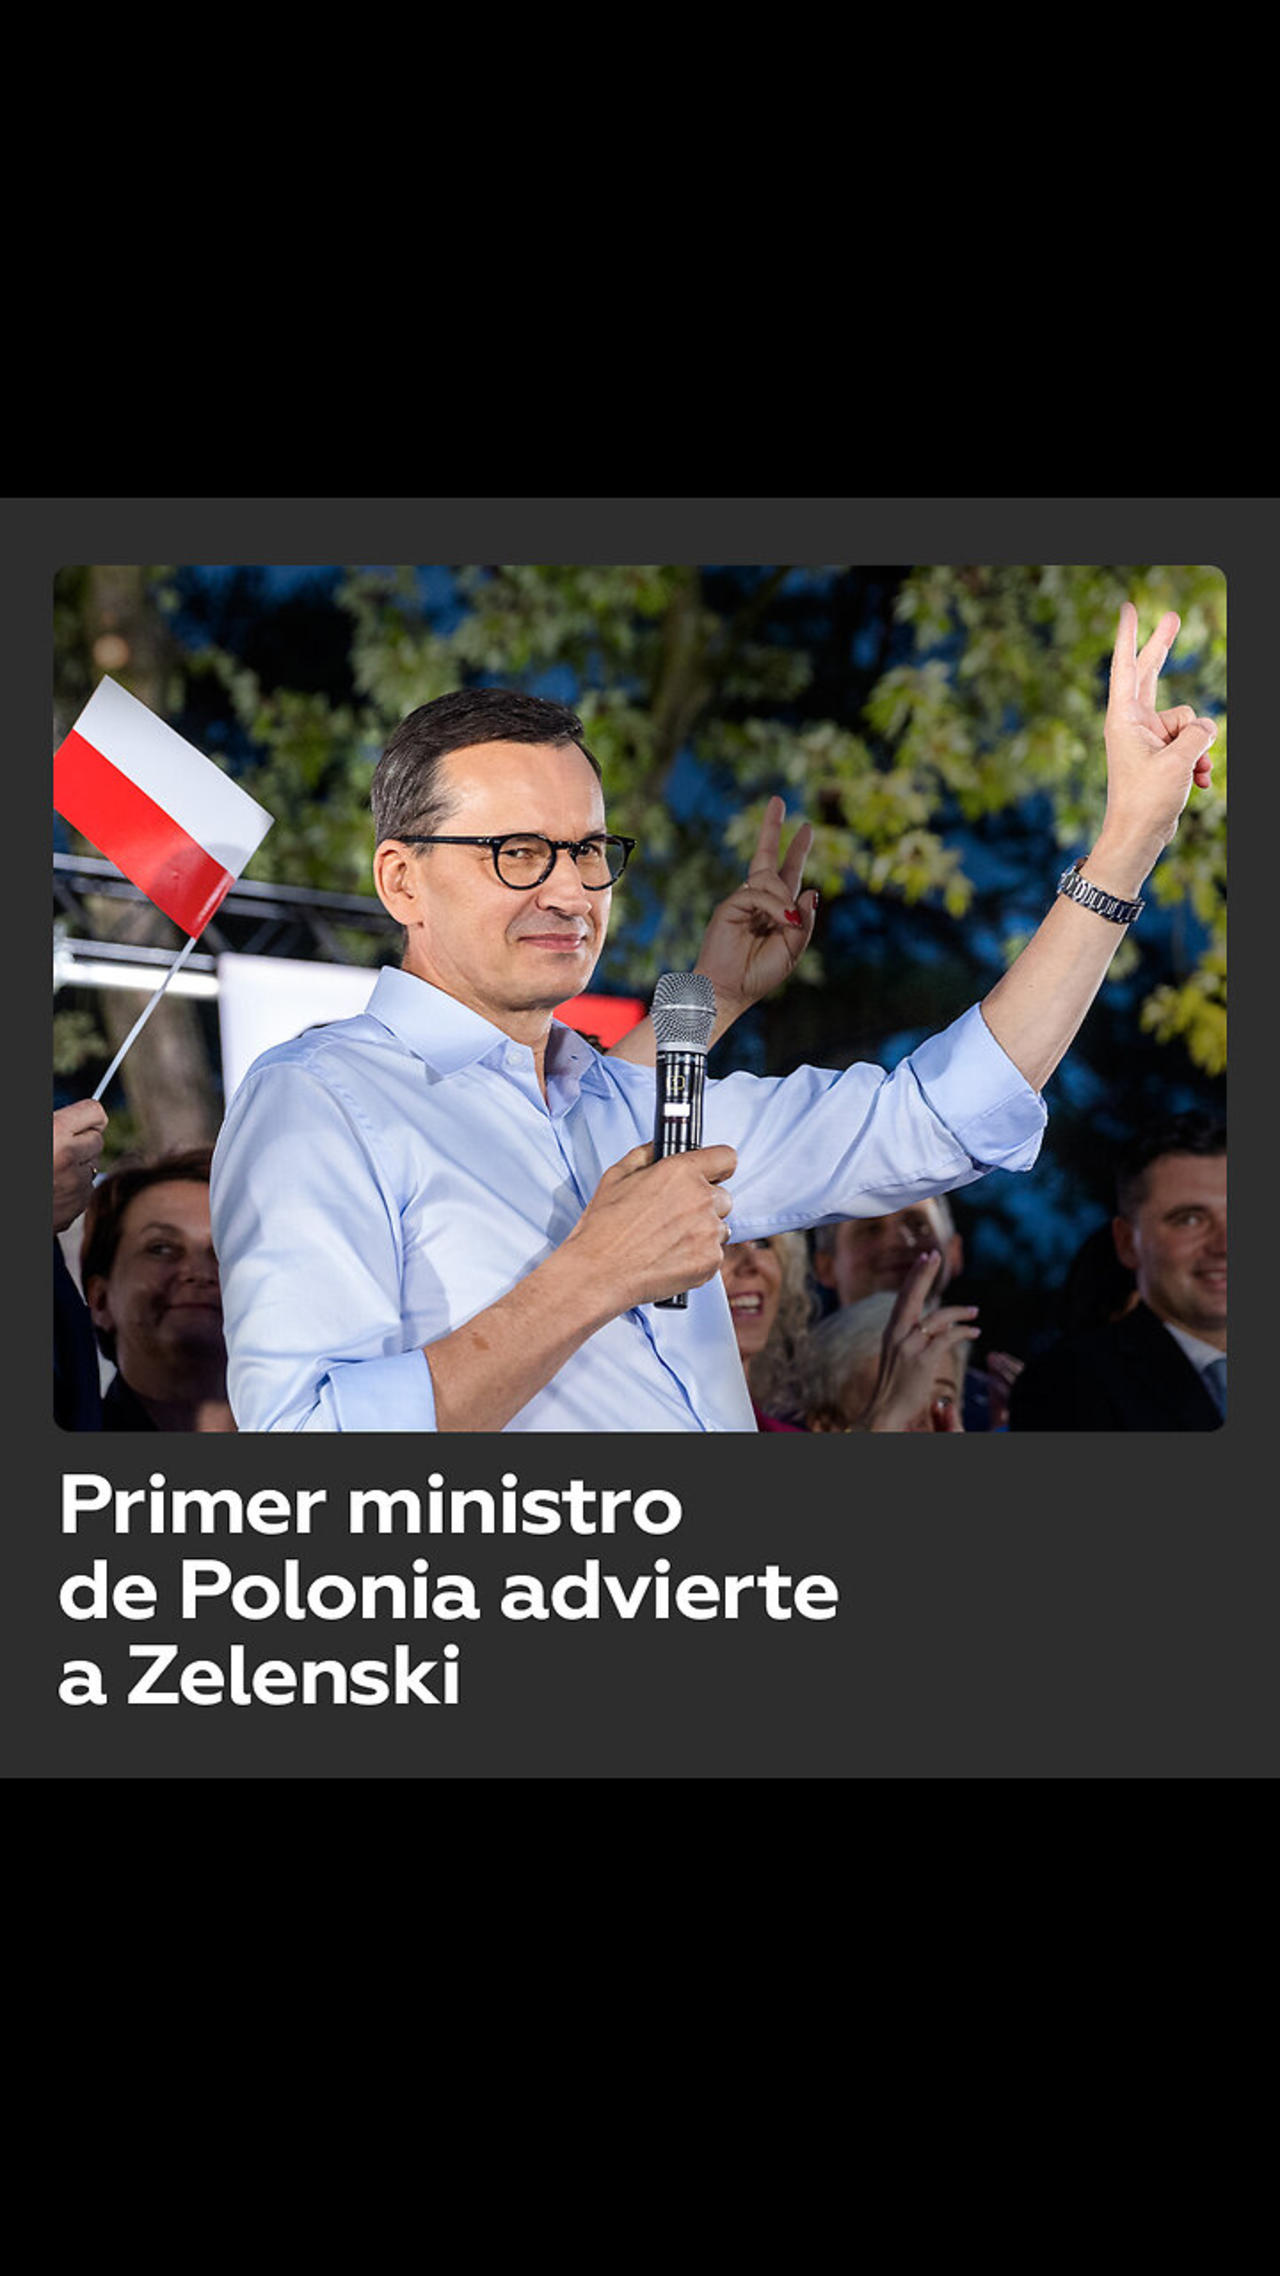 “Nunca insulte a los polacos”: el primer ministro de Polonia advierte a Zelenski